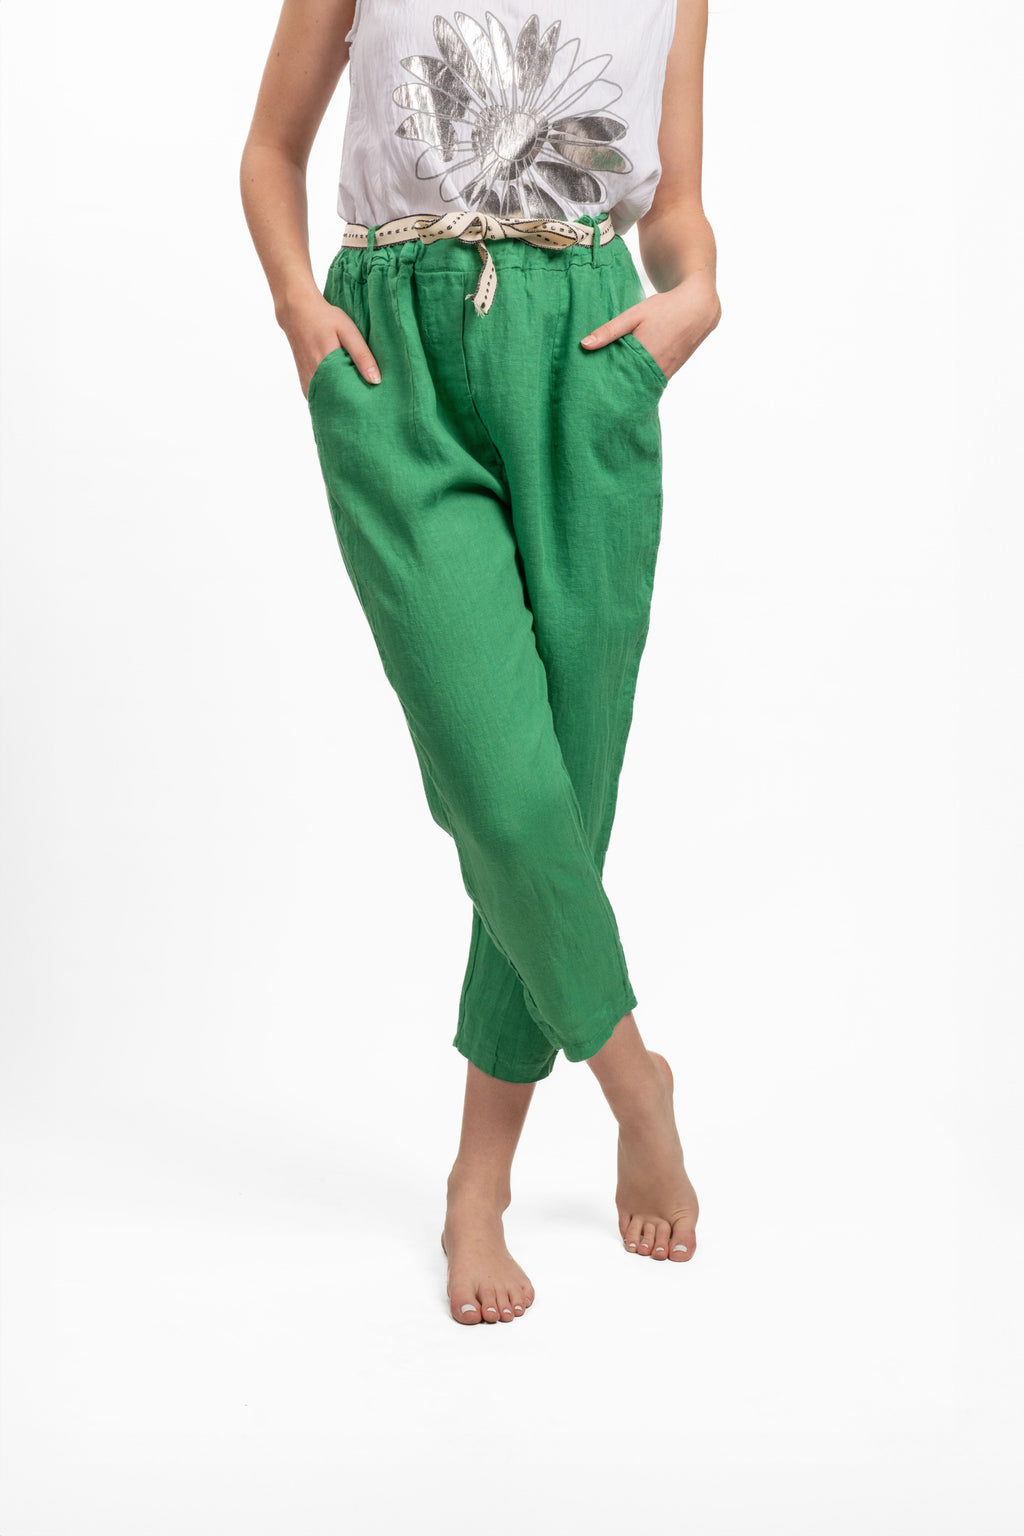 LIS S23 Green Linen Pants